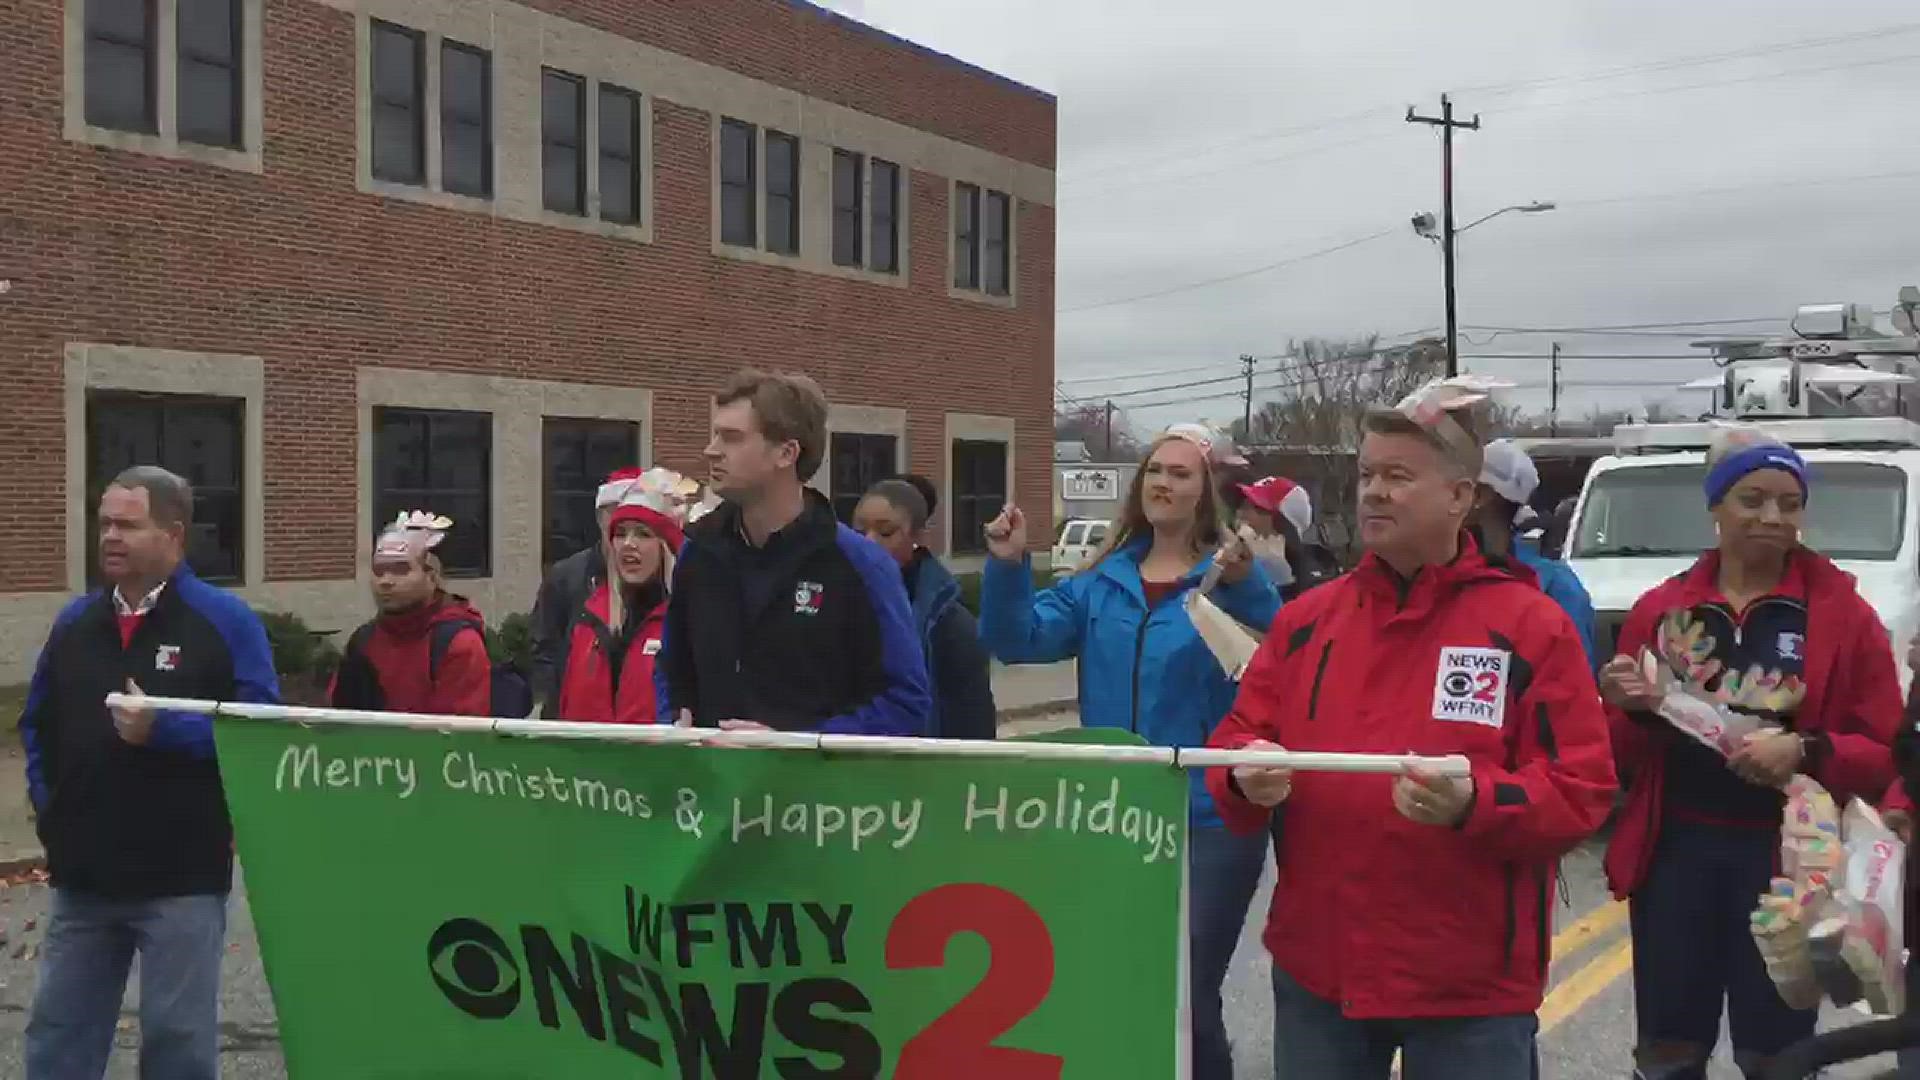 See the WFMY News 2 team at the Greensboro Holiday Parade.